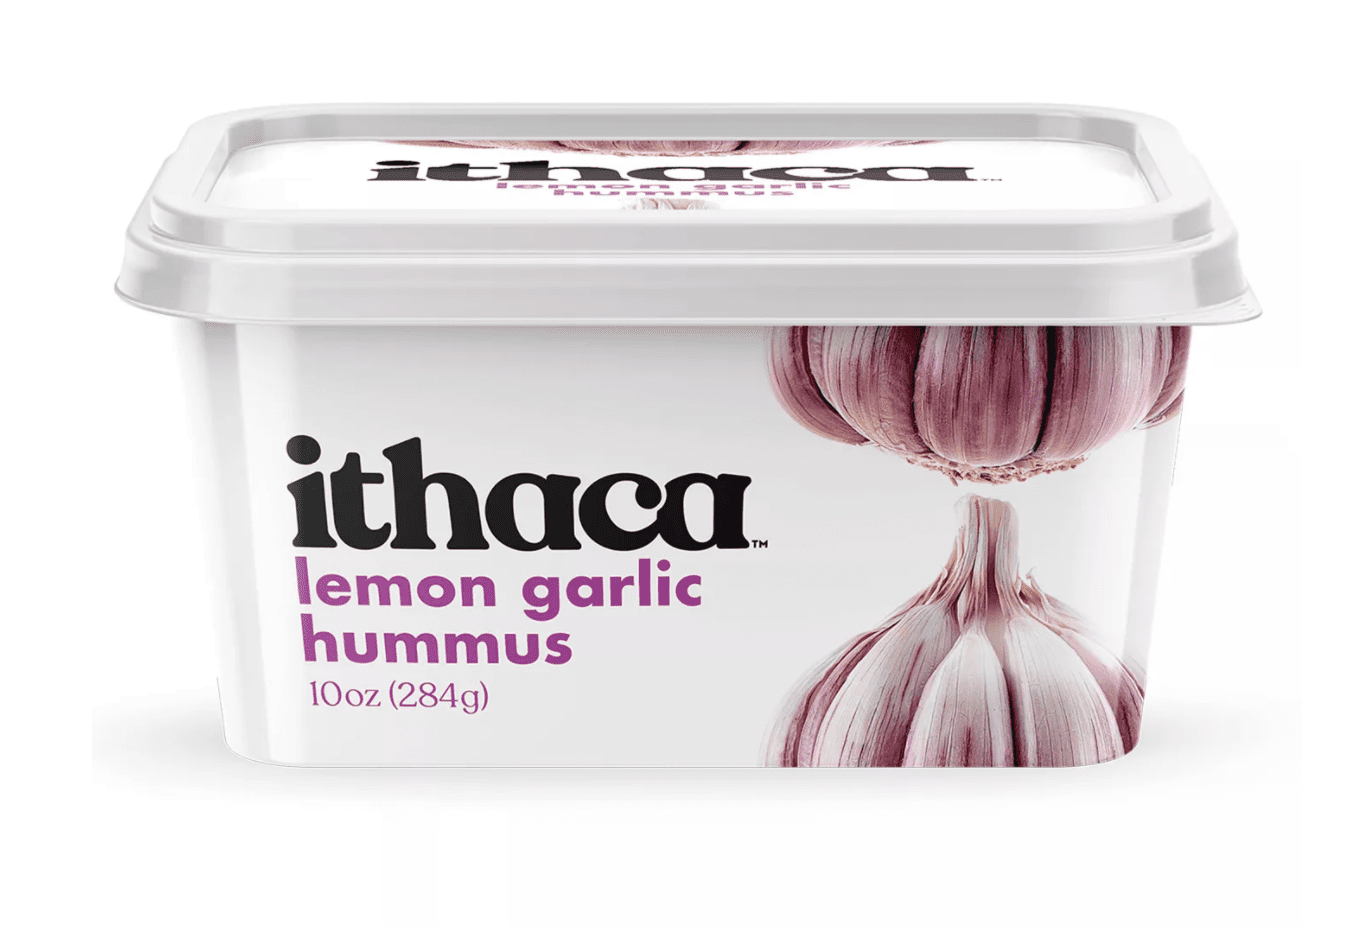 container or ithaca lemon garlic hummus